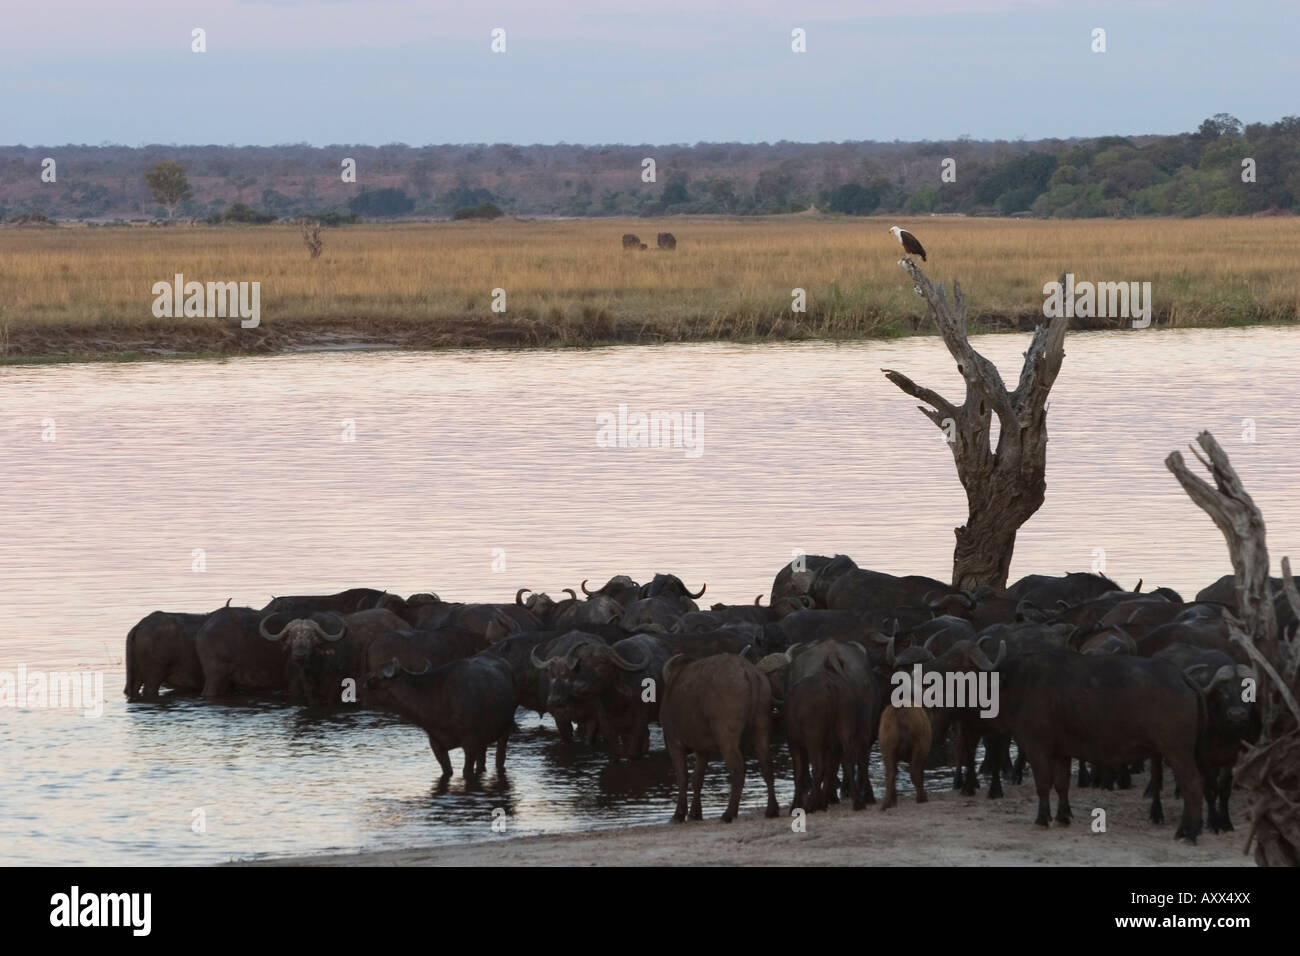 African buffalos, Syncerus caffer, Chobe River, Chobe National Park, Botswana, Africa Stock Photo